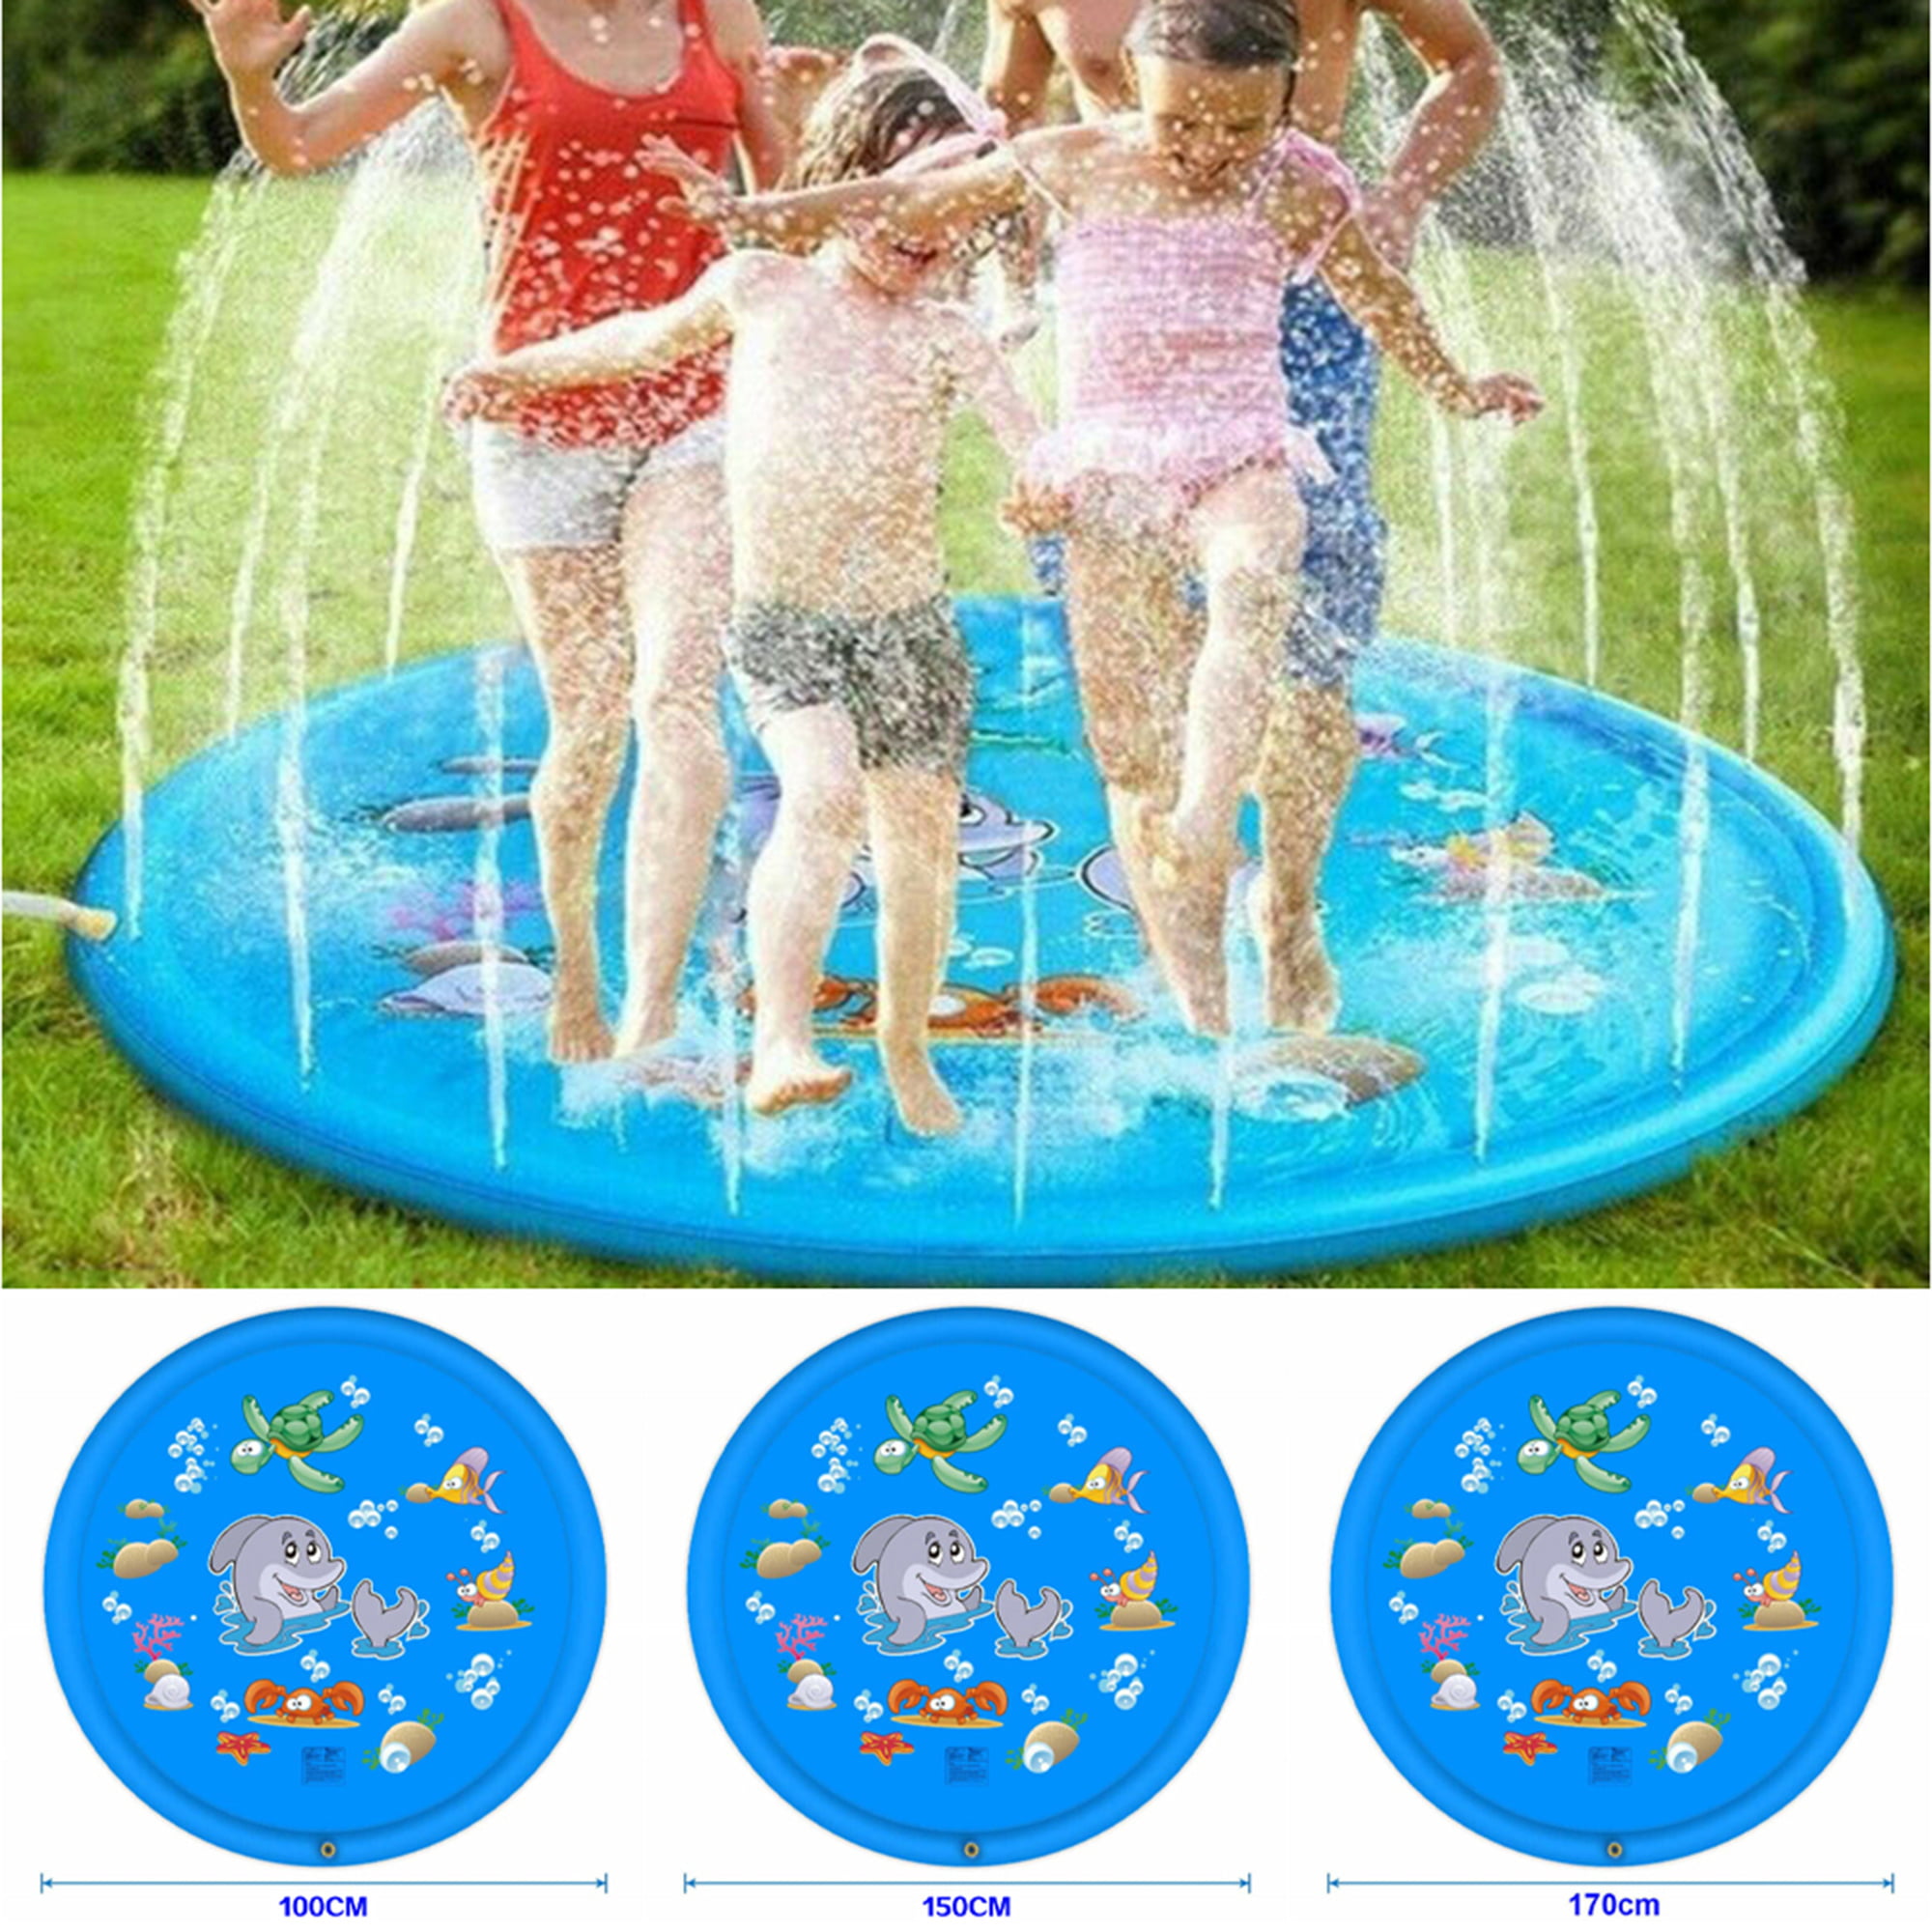 170cm Inflatable Sprinkler Splash Pad Play Mat Water Toys Swimming Pool for Kids 